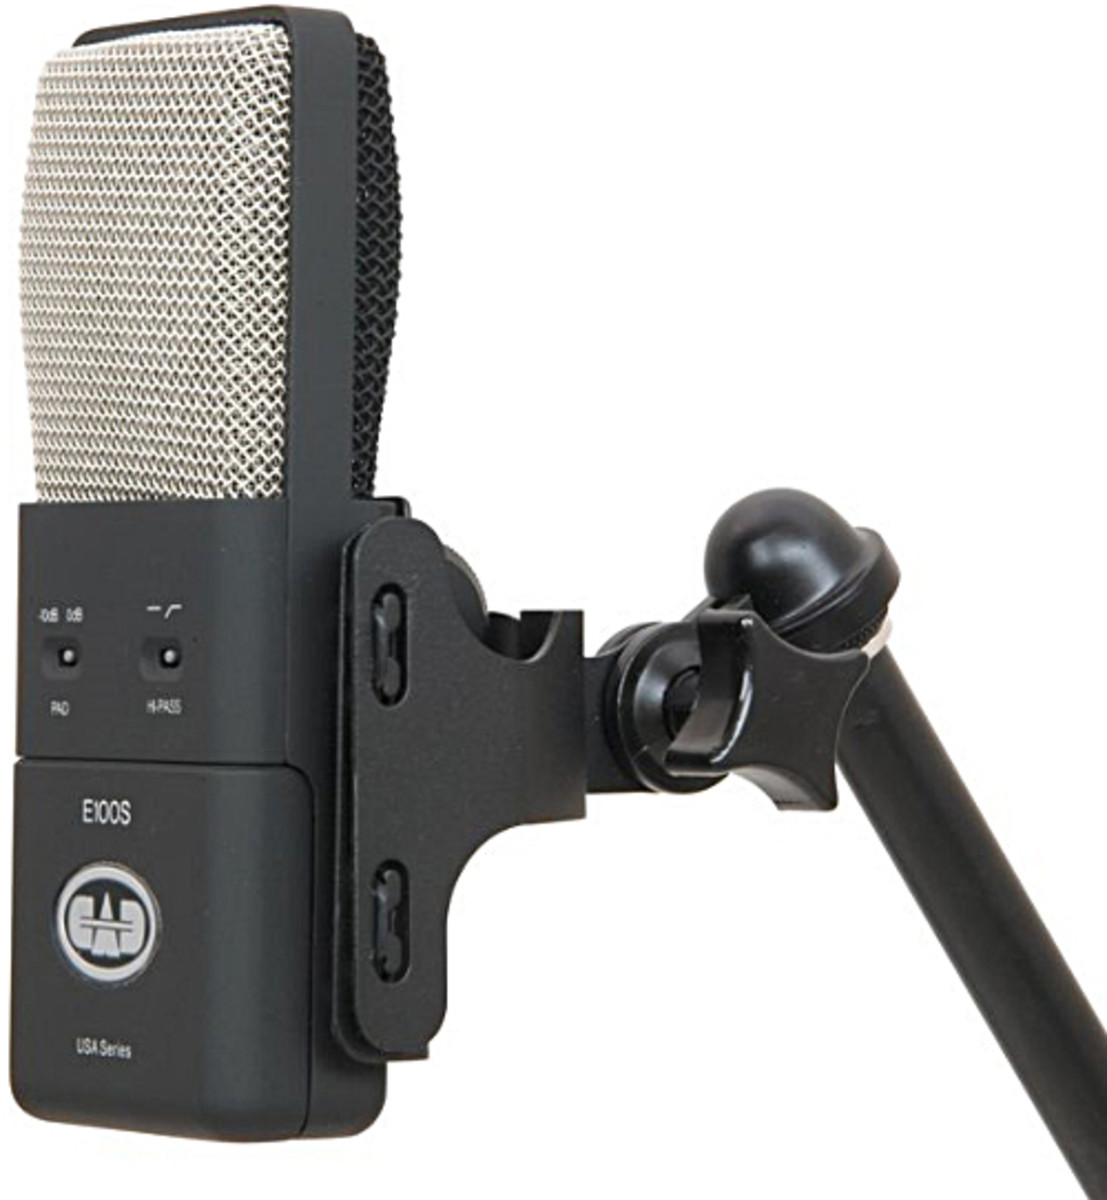 cad-e100s-supercardioid-condenser-microphone